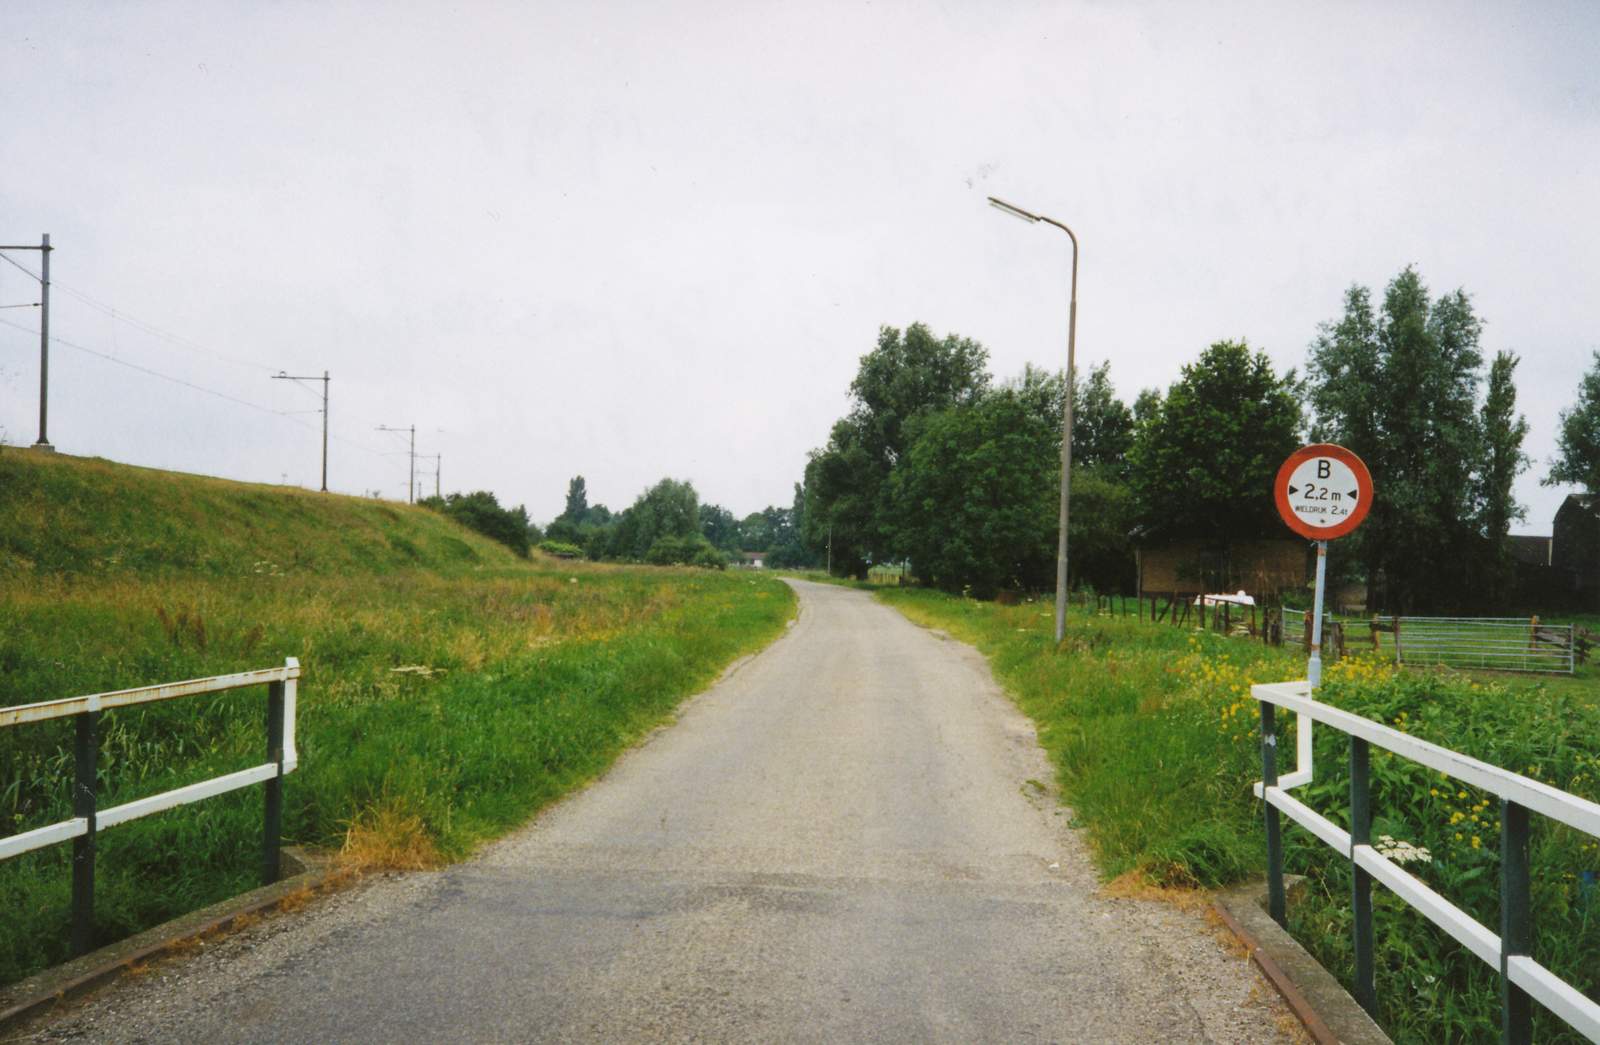 025-155 - Tiendweg-west - Parallelweg - jul 1998.jpg